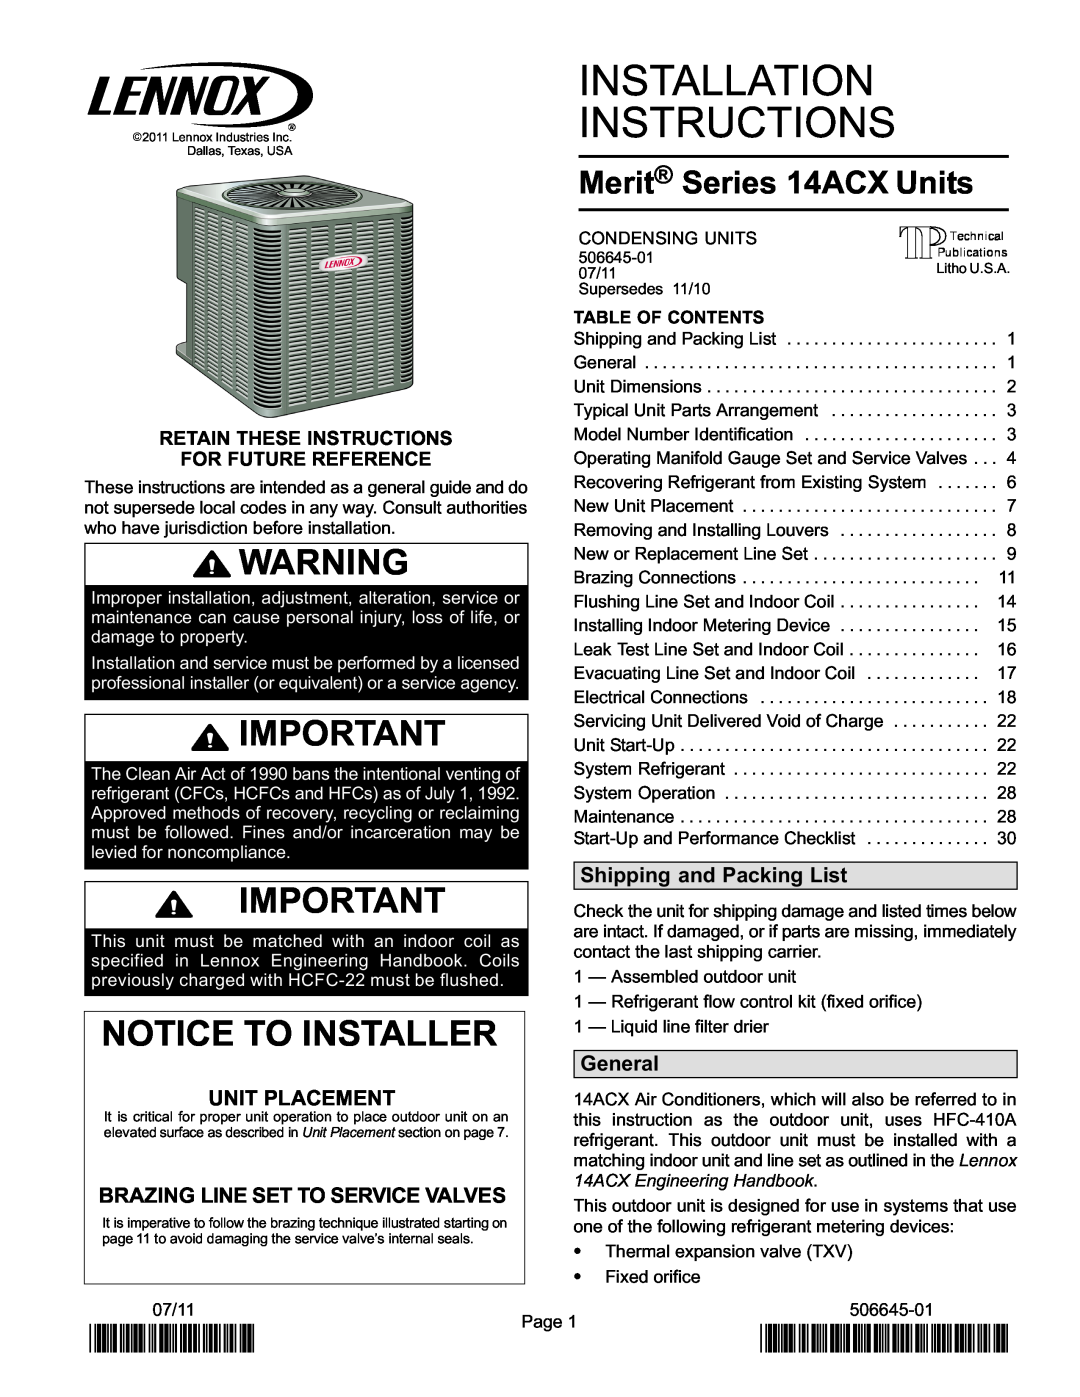 Lennox International Inc Merit Series 14ACX Units installation instructions Notice To Installer, 2P0711, P506645-01 